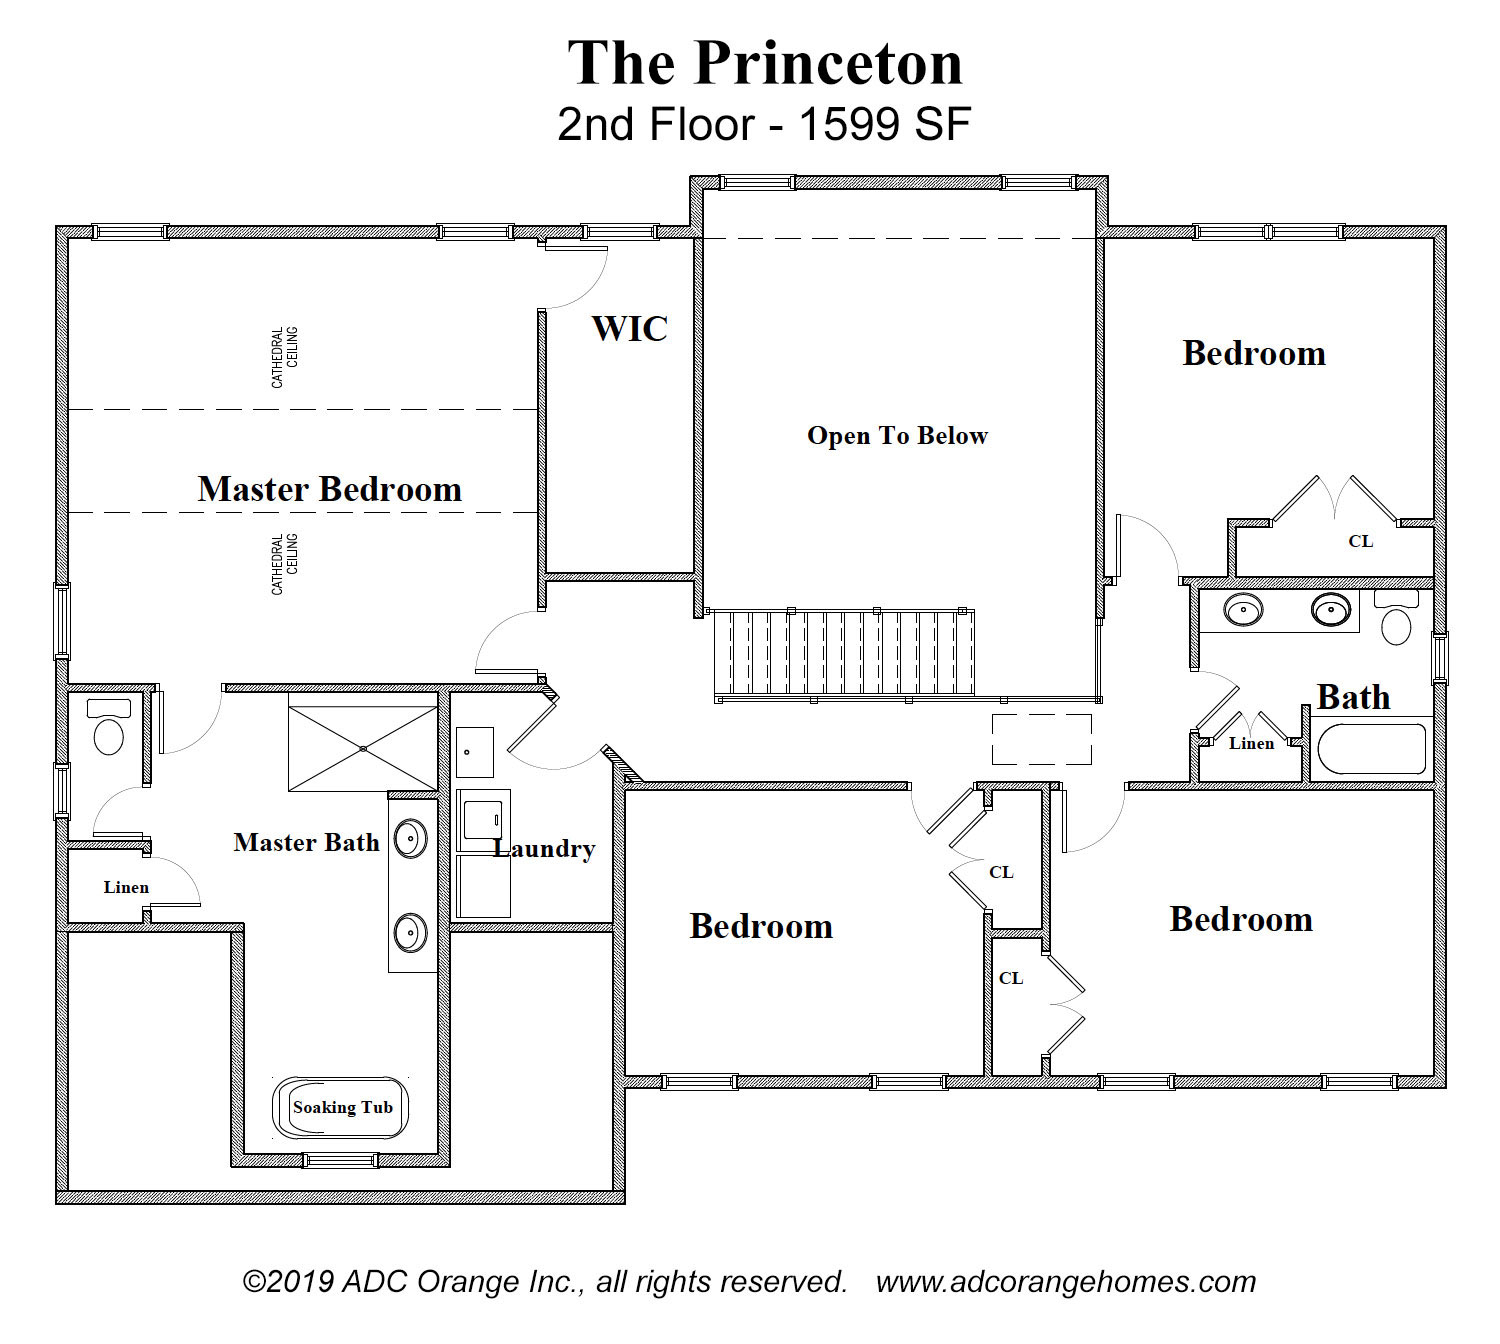 2nd Floor Plan - The Princeton